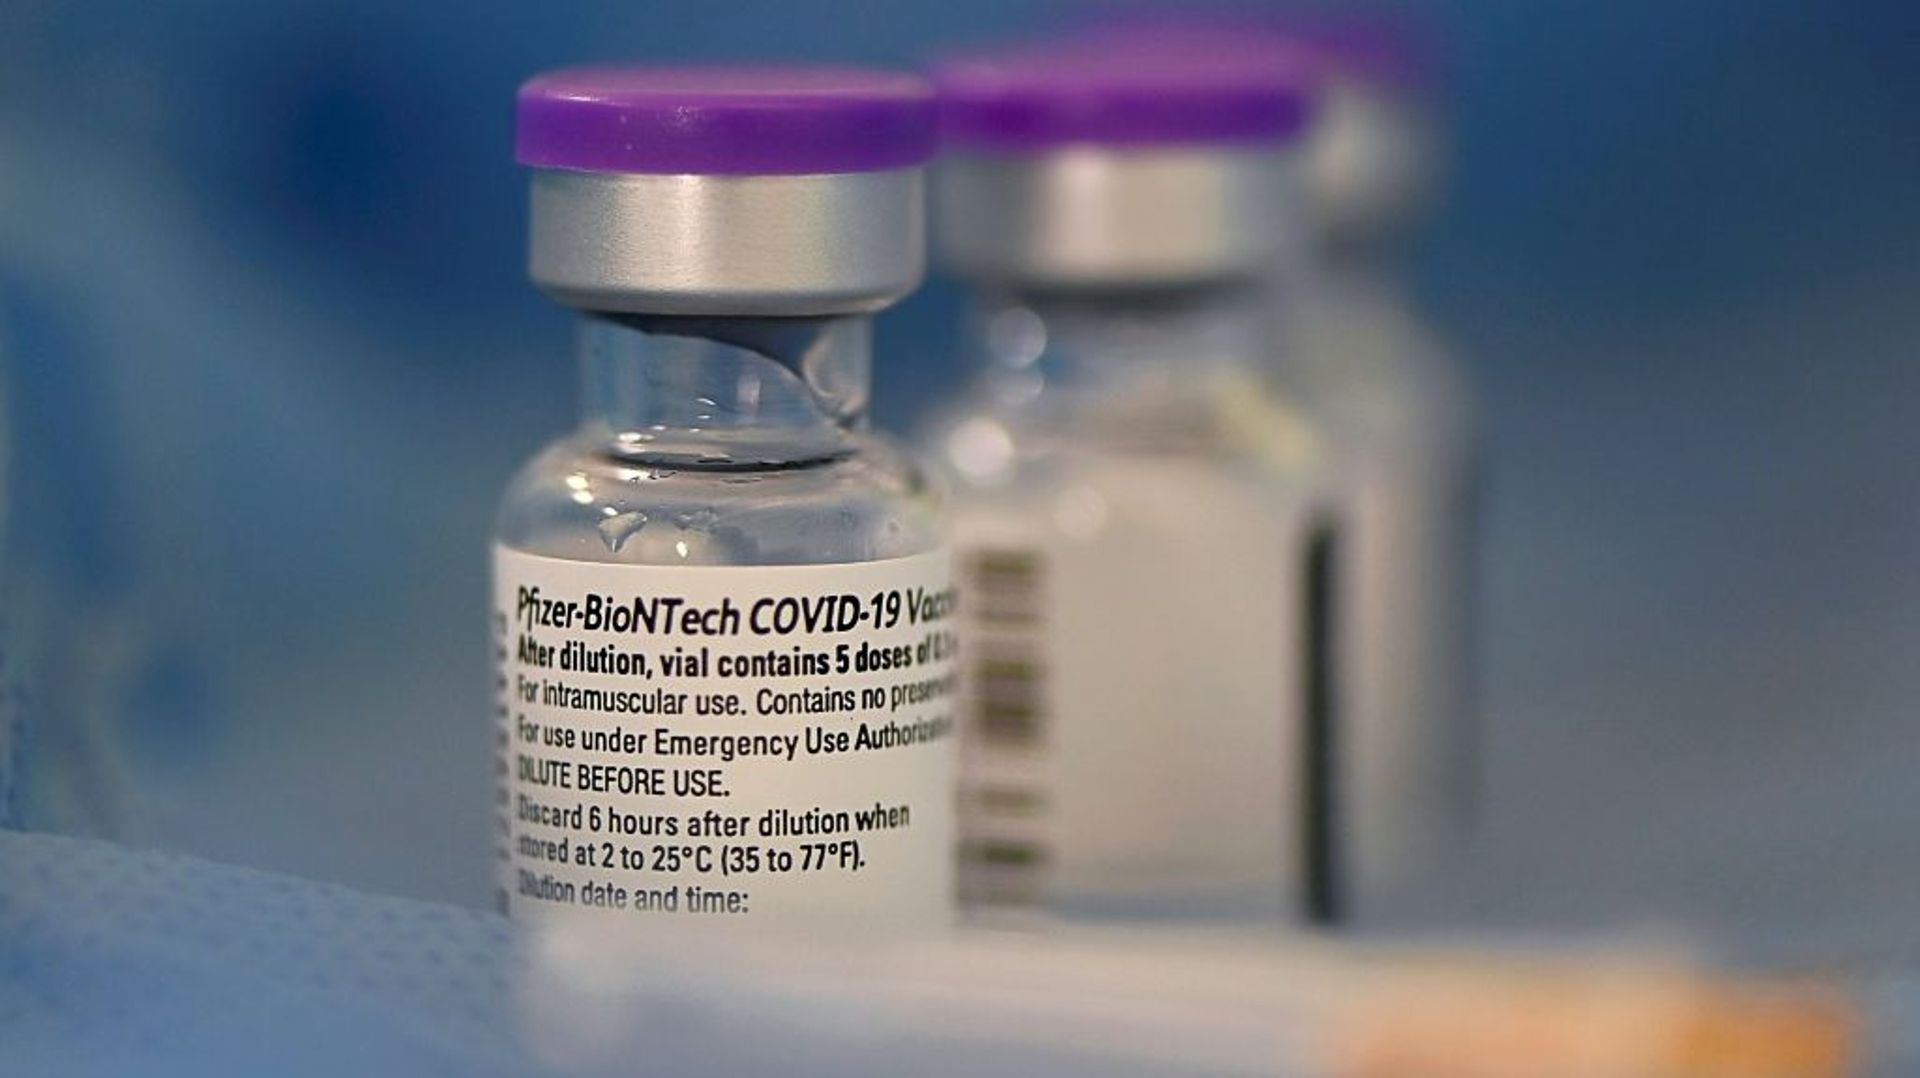 pfizer-prevoit-de-vendre-36-milliards-de-dollars-de-son-vaccin-anti-covid-en-2021